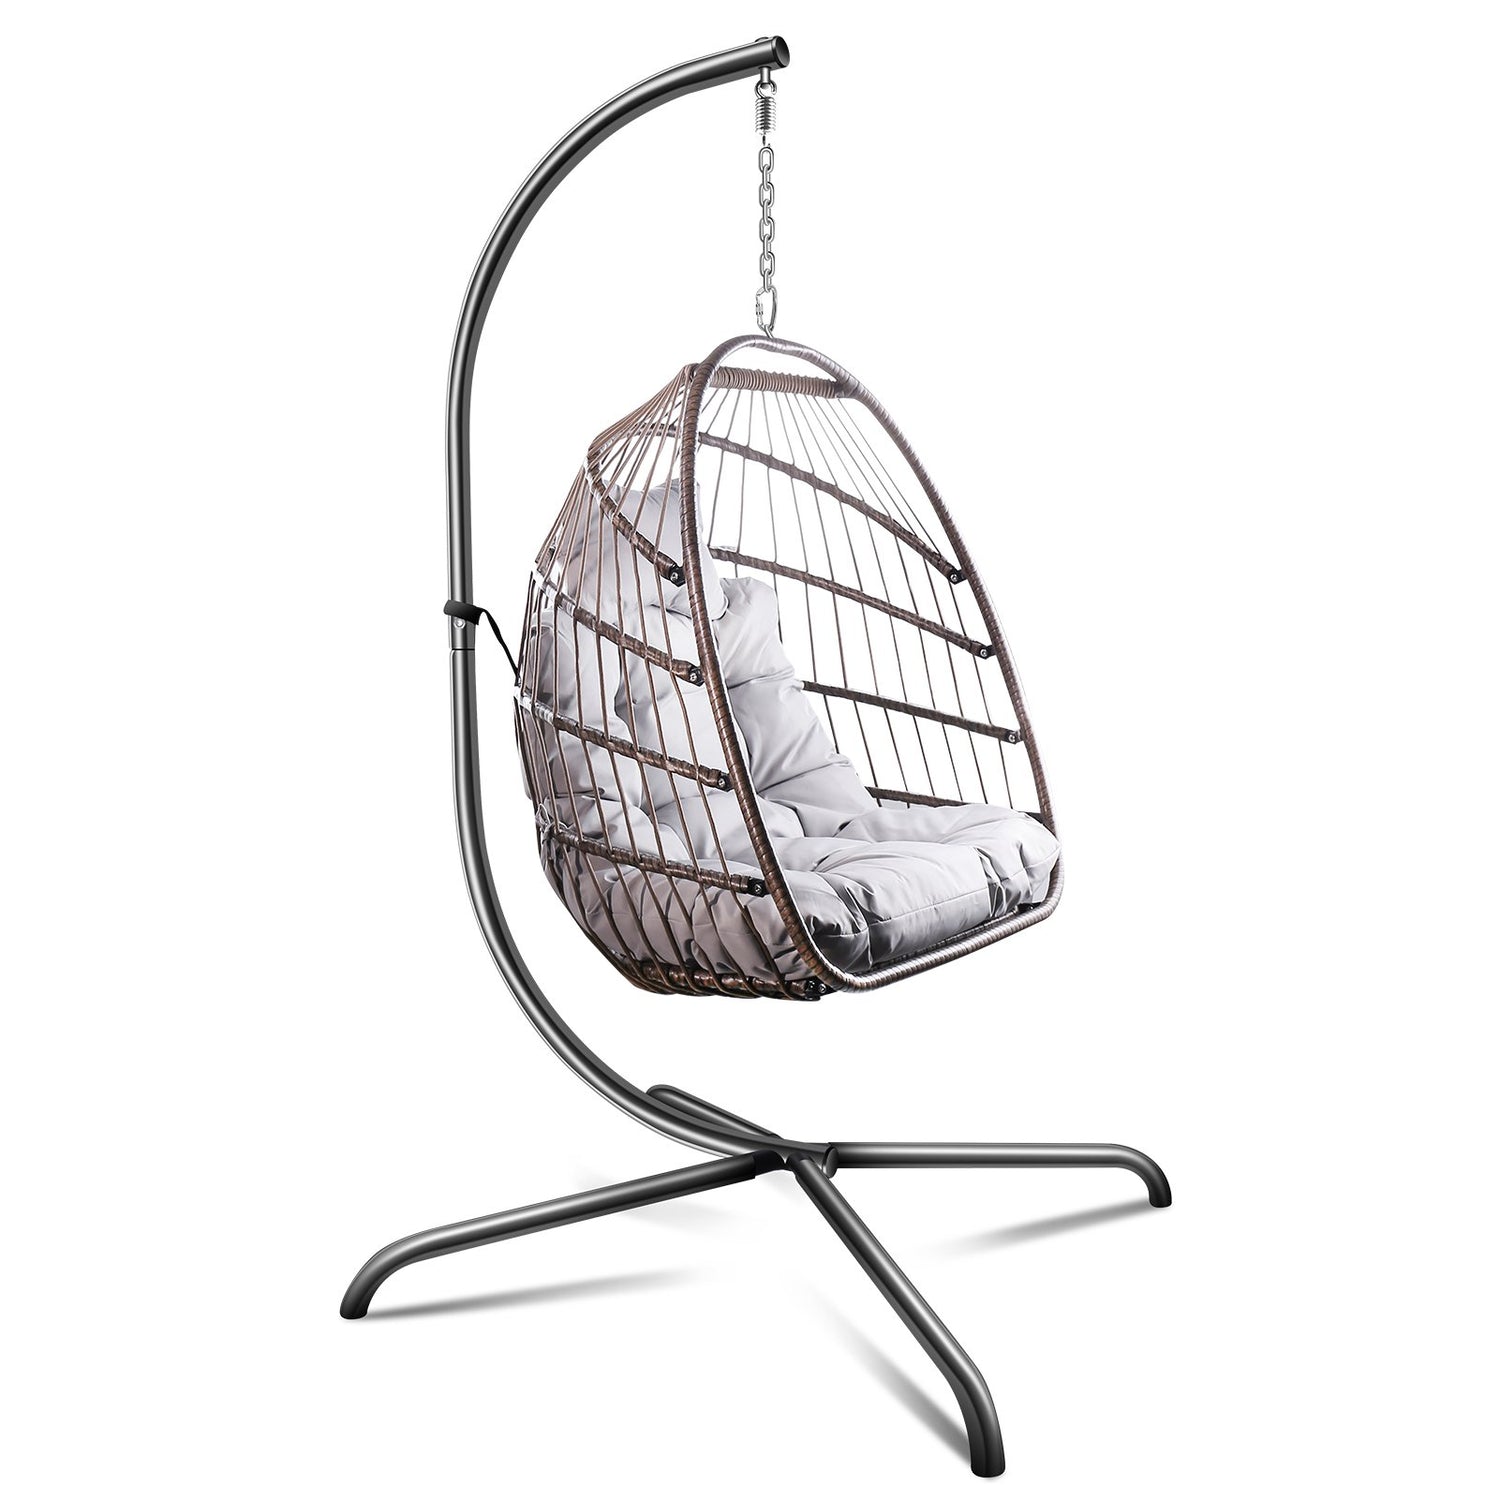 Anrli Patio Wicker Hanging Chair Swing